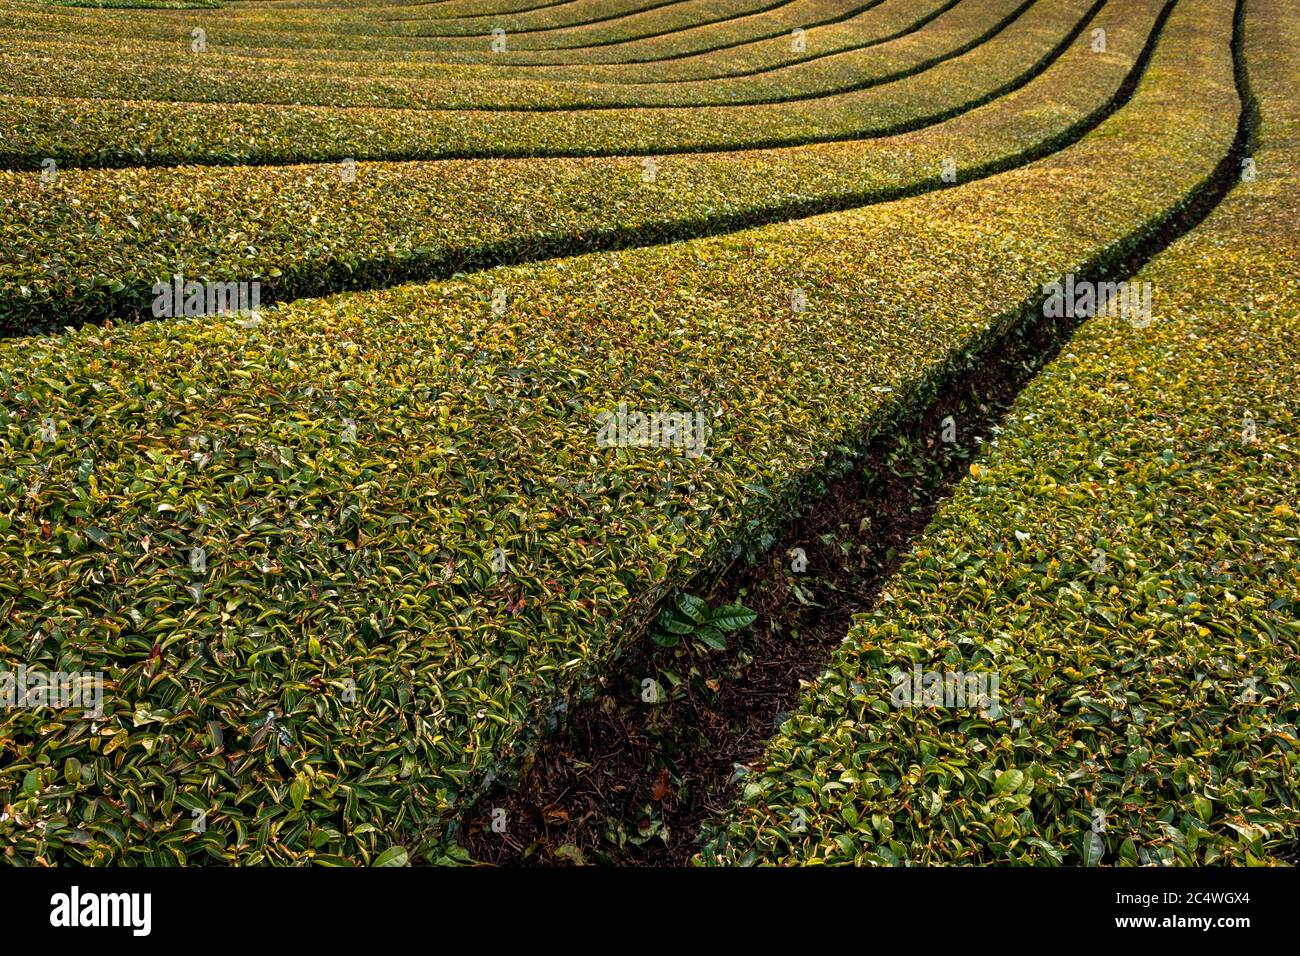 Ishidera Tea Fields of Green Uji Tea plantation in Wazuka town in Kyoto prefecture of Japan Stock Photo